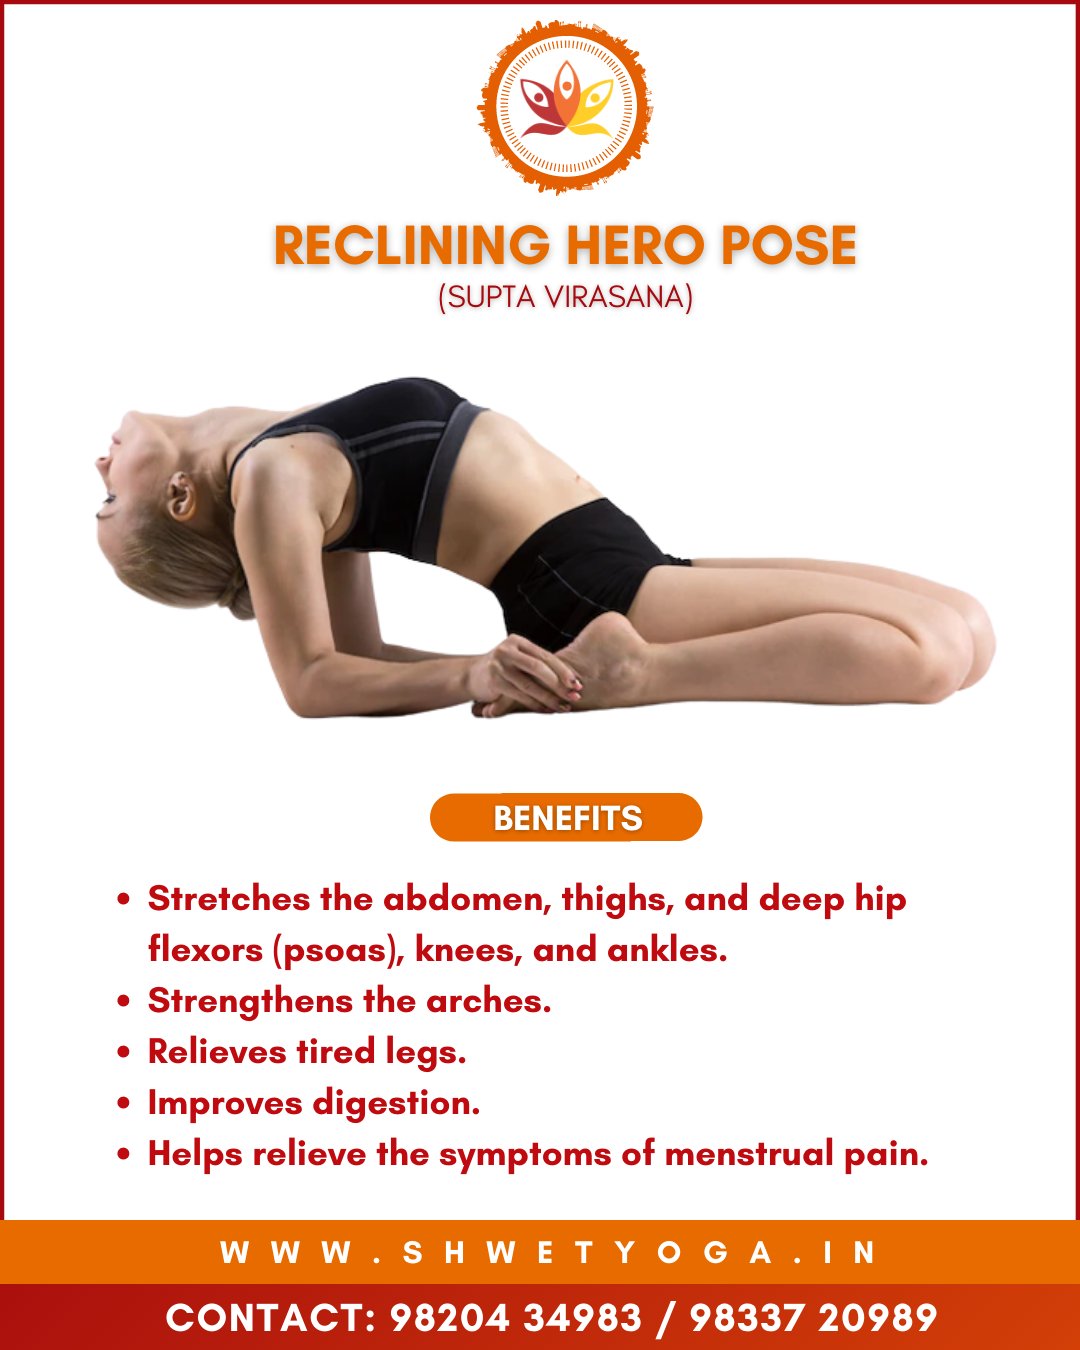 Supta Virasana (Reclining Hero Pose) | Poses, Yoga poses, Yoga